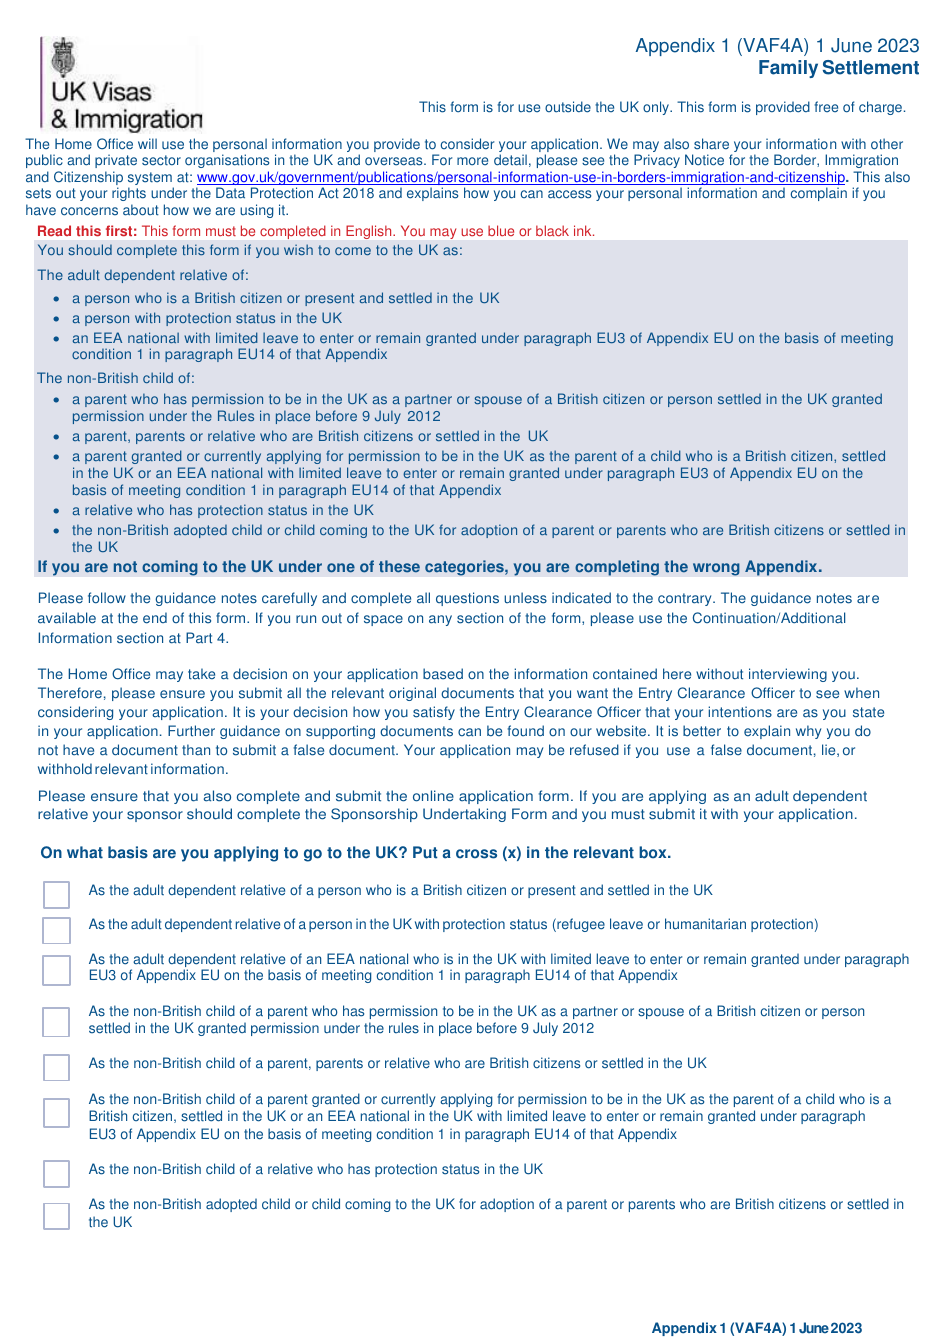 Form VAF4A Appendix 1 Family Settlement Application - United Kingdom, Page 1